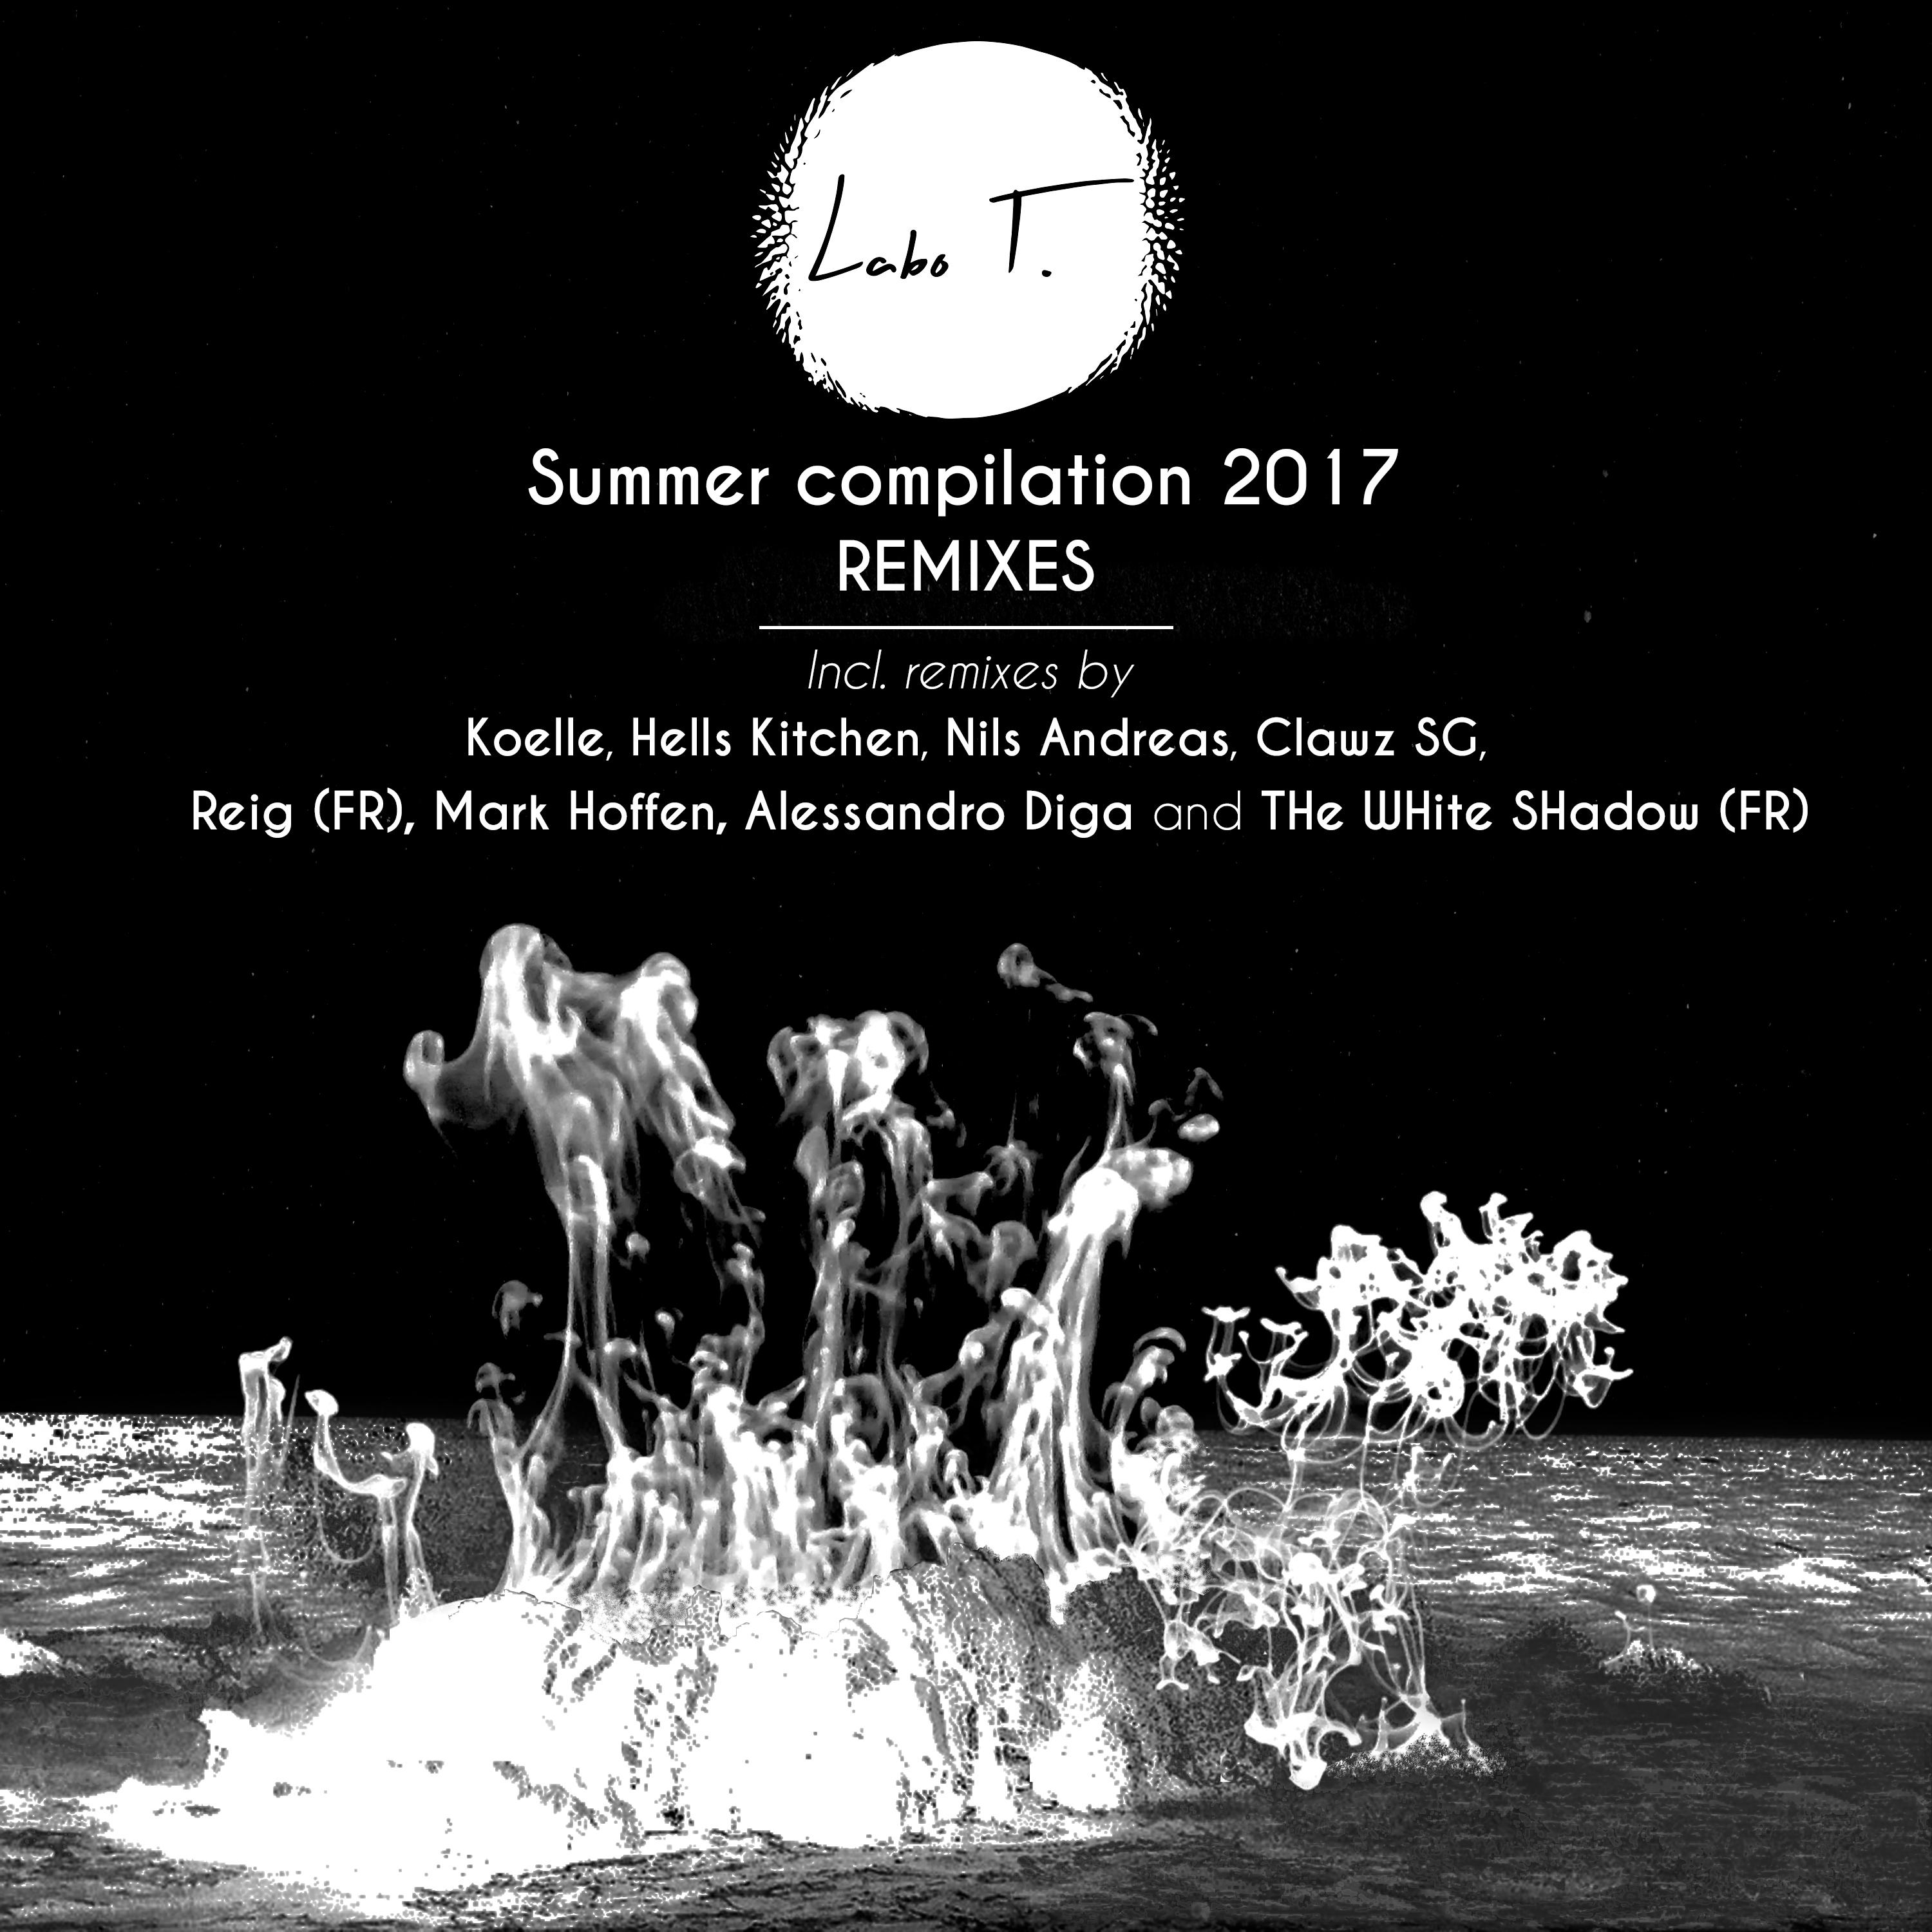 Summer Compilation 2017 Remixes